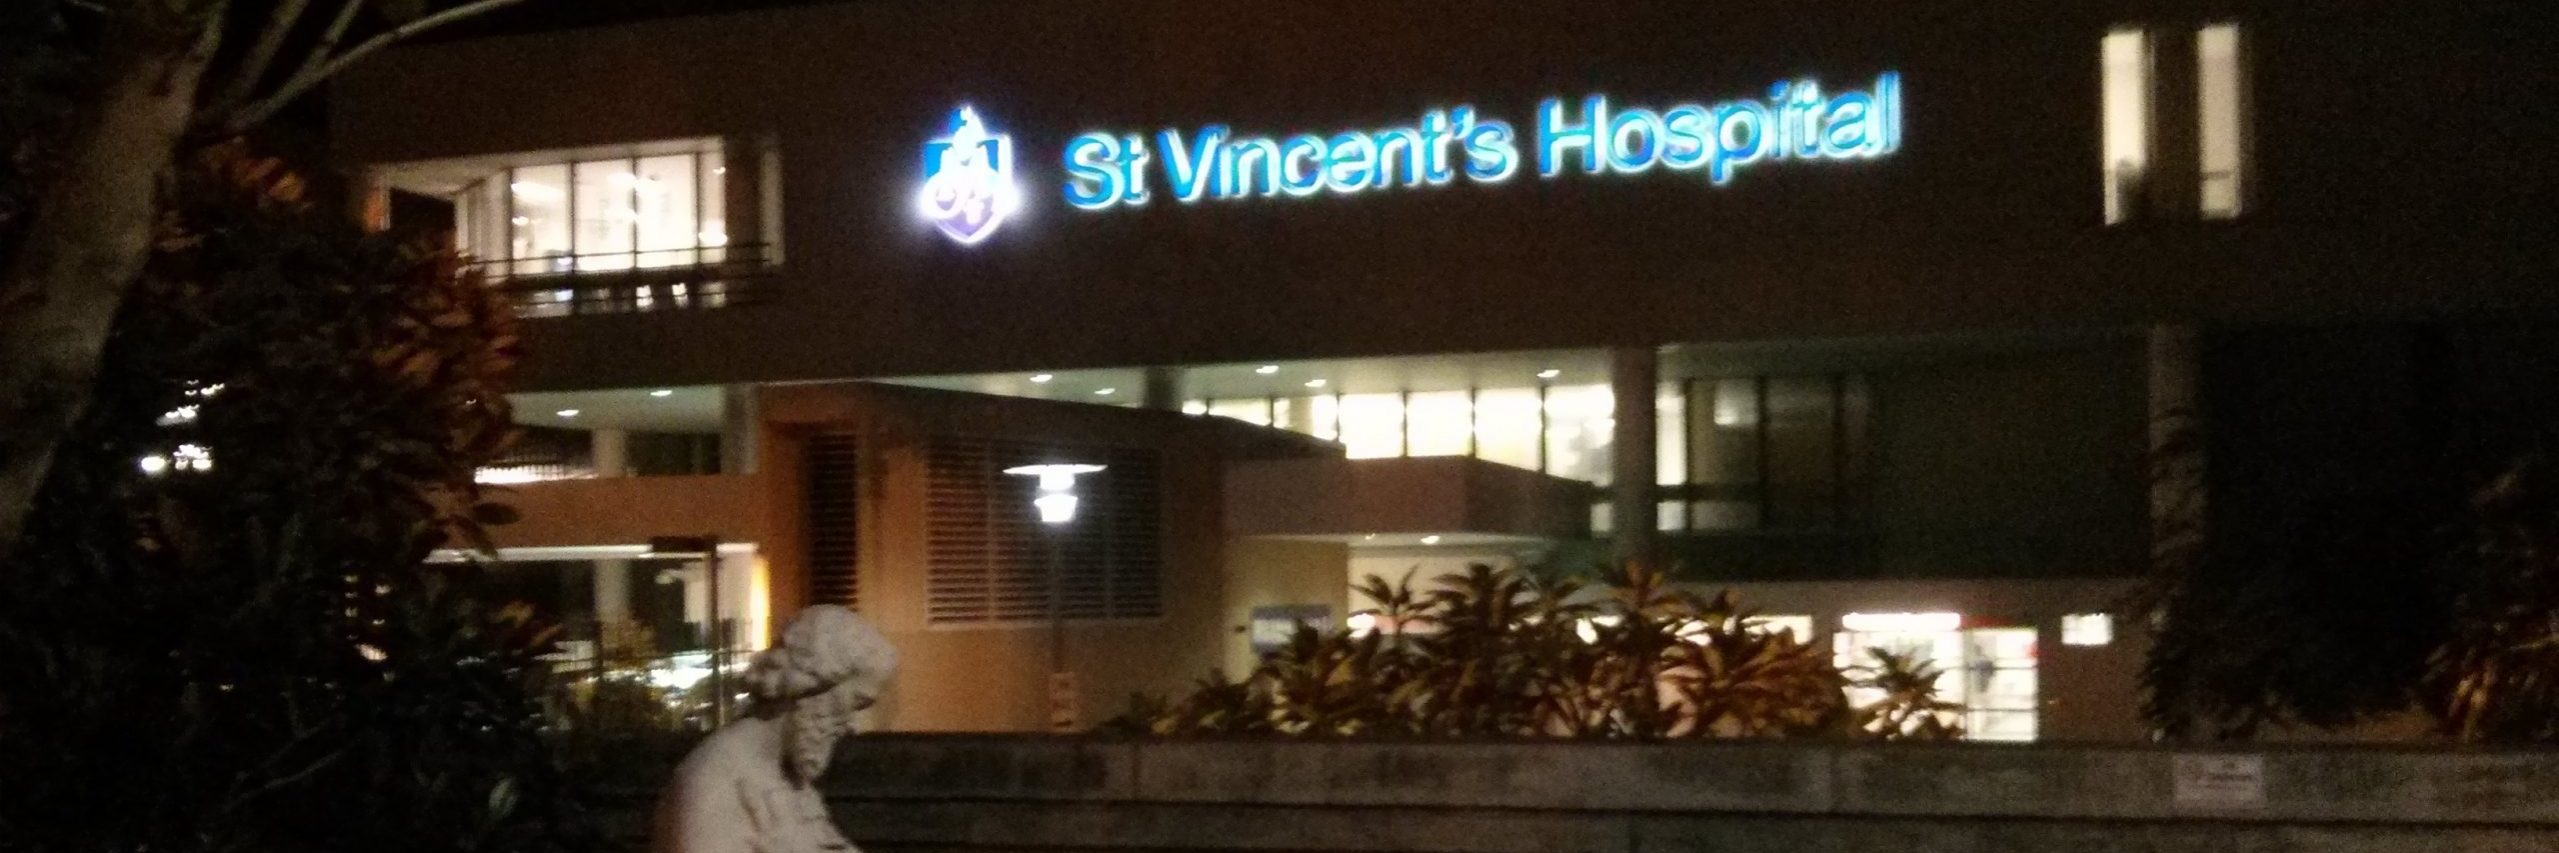 St Vincent's Hospital in Sydney, Australia